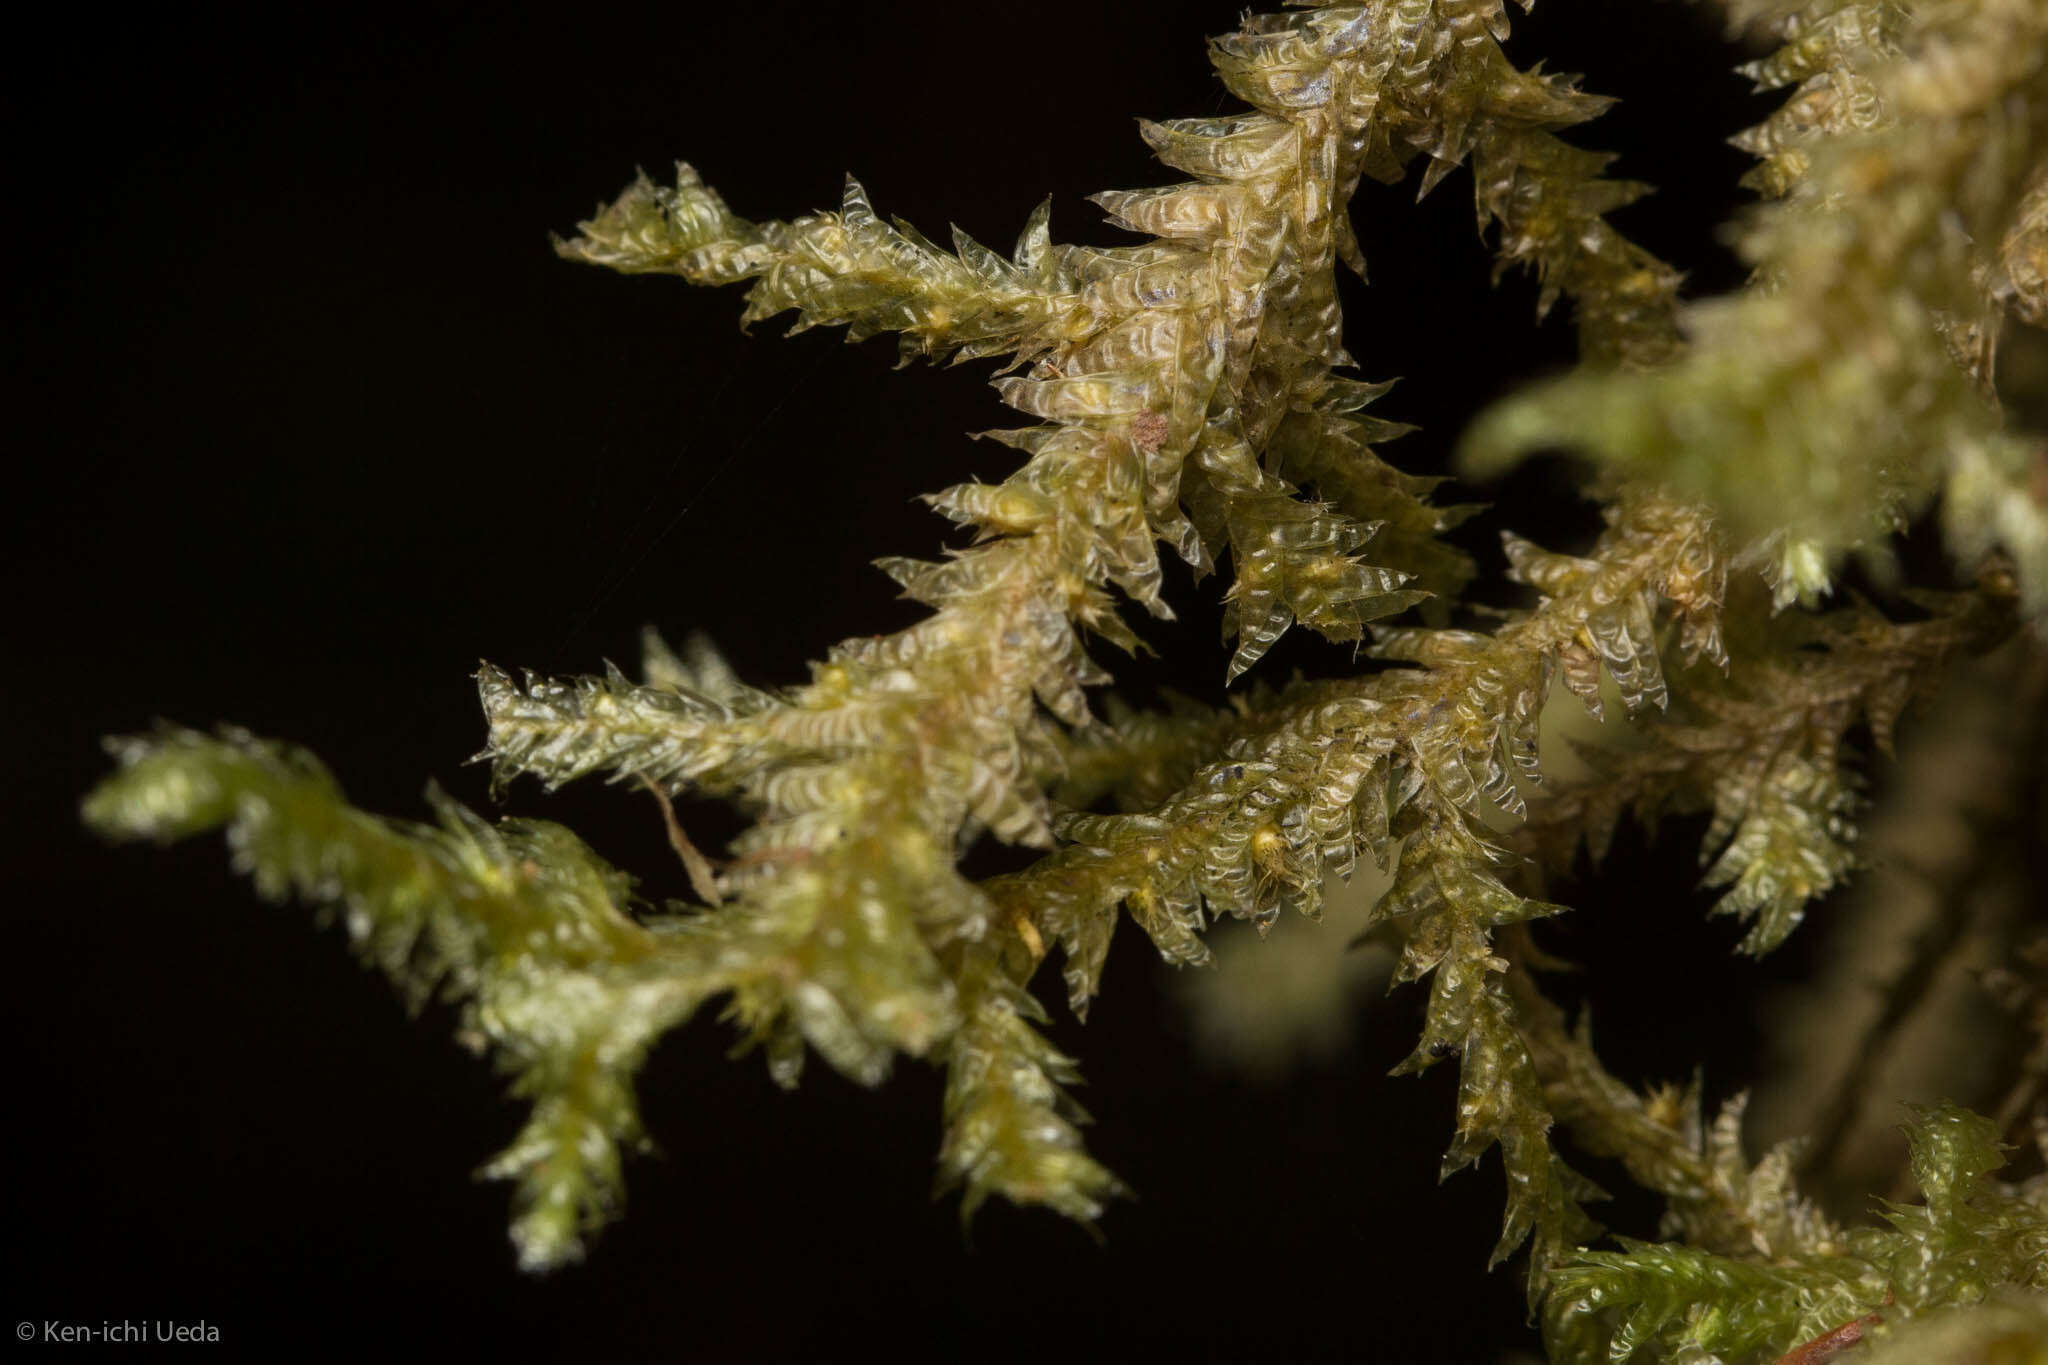 Image of Douglas' neckera moss